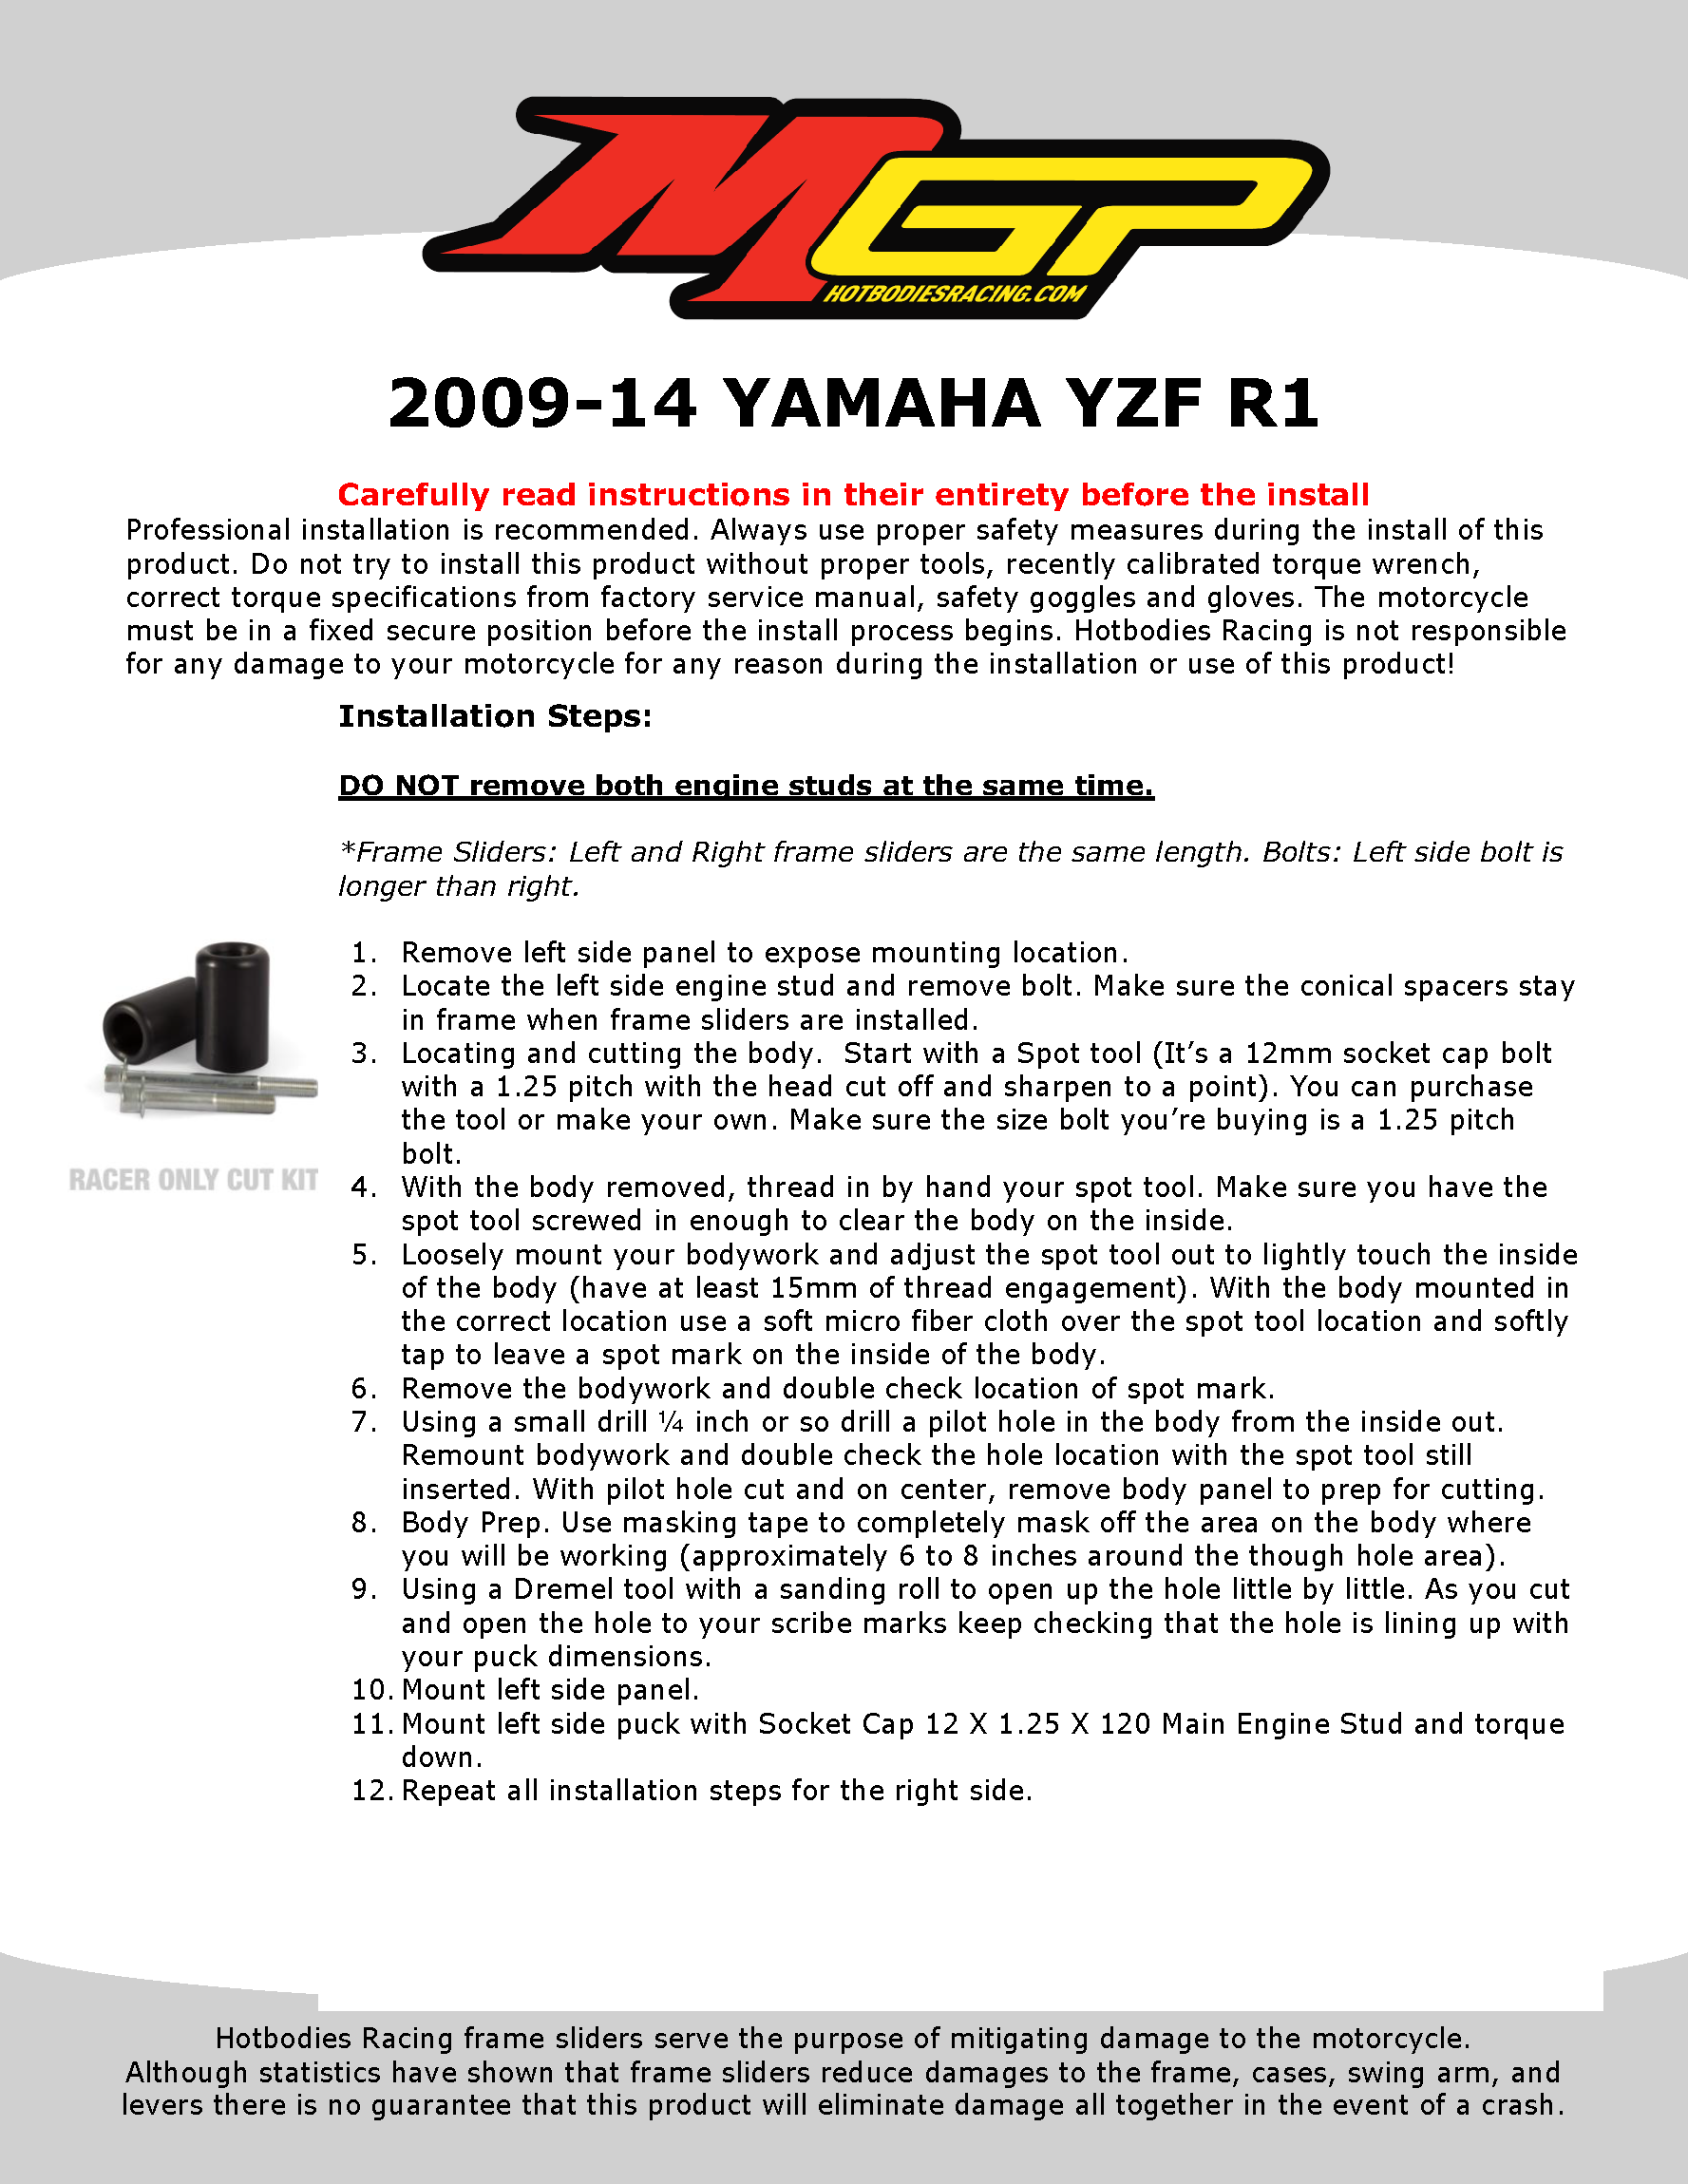 

2009-14 YAMAHA YZF R1 Frame Sliders Installation

